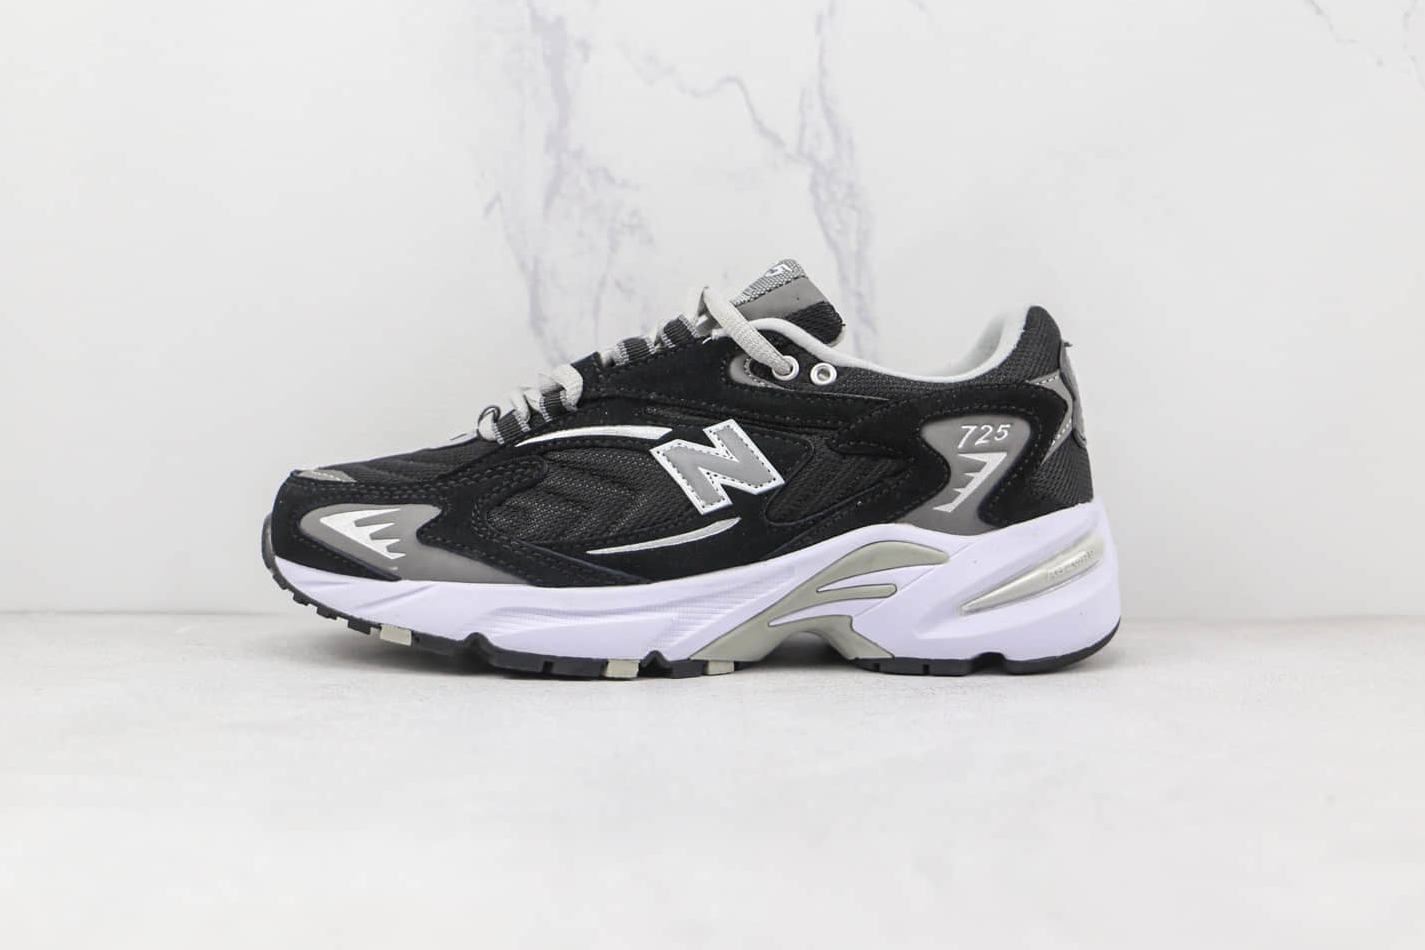 New Balance 725 'Black Metallic Silver' - Stylish and Sleek Sneakers